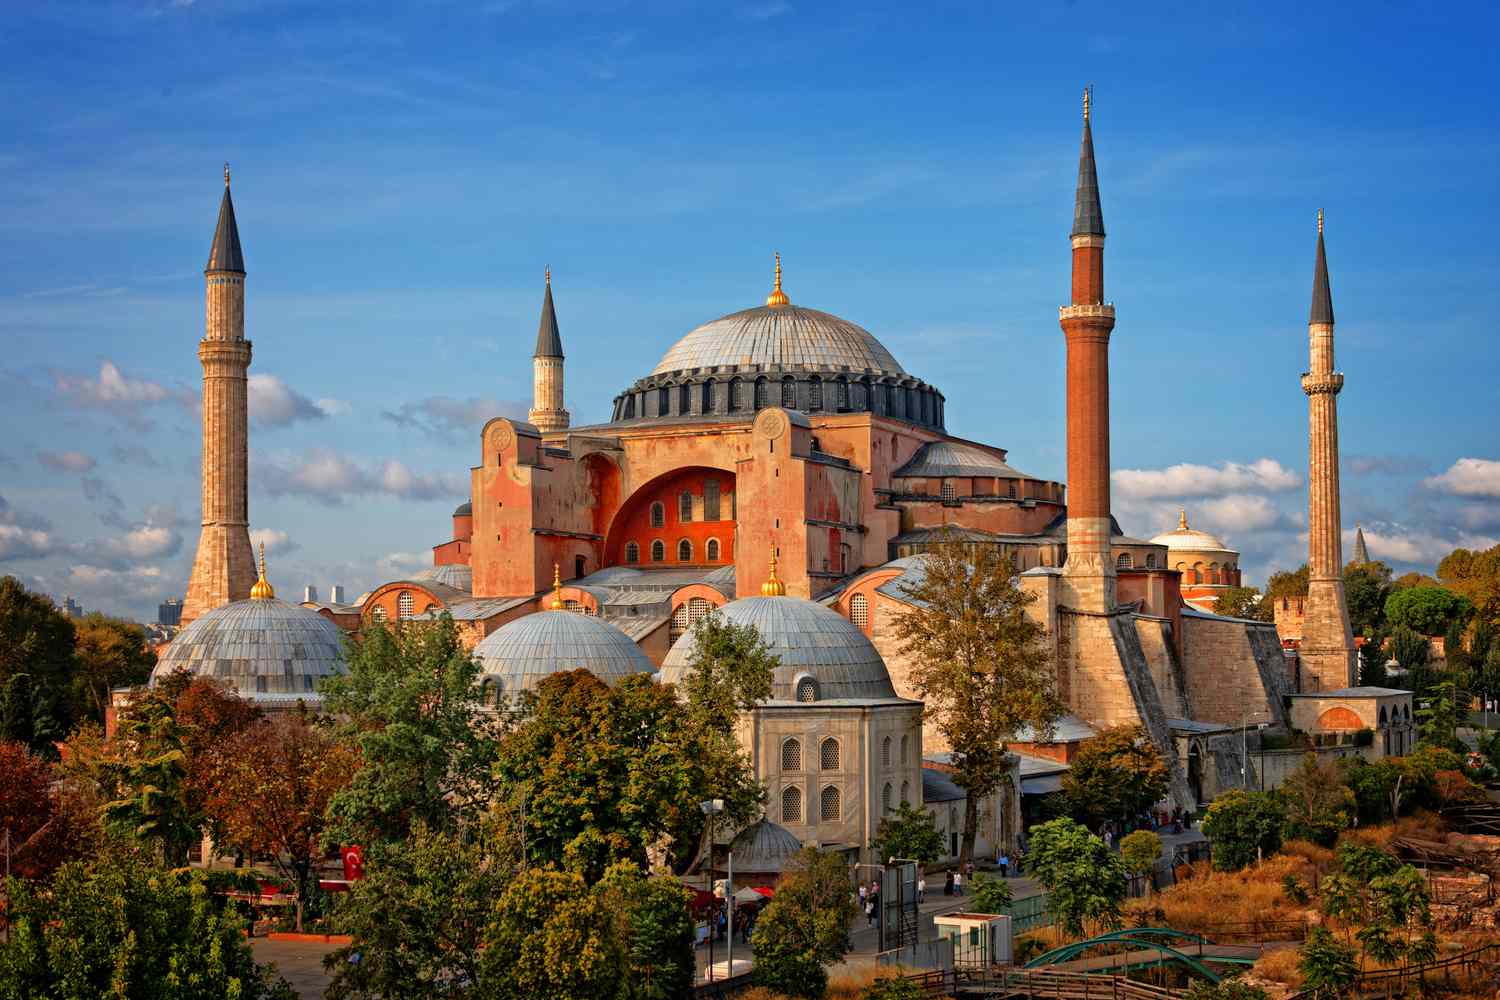 Hagia Sophia in Istanbul, Turkey on a sunny day.